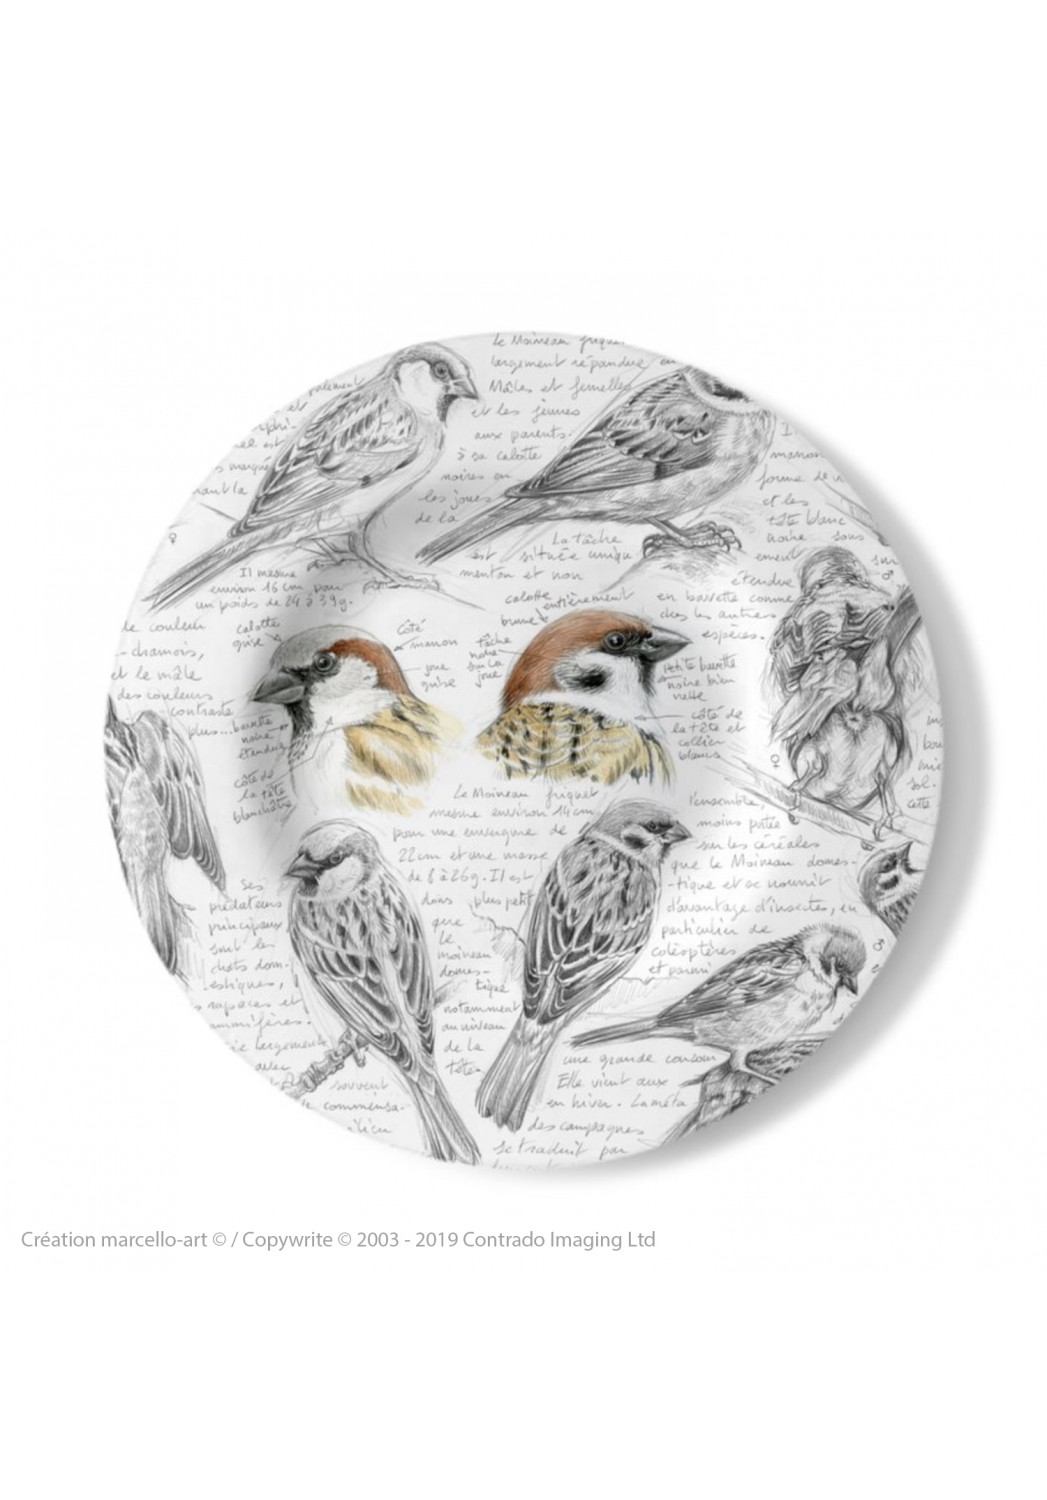 Marcello-art: Decorating Plates Decoration plates 333 House Sparrow